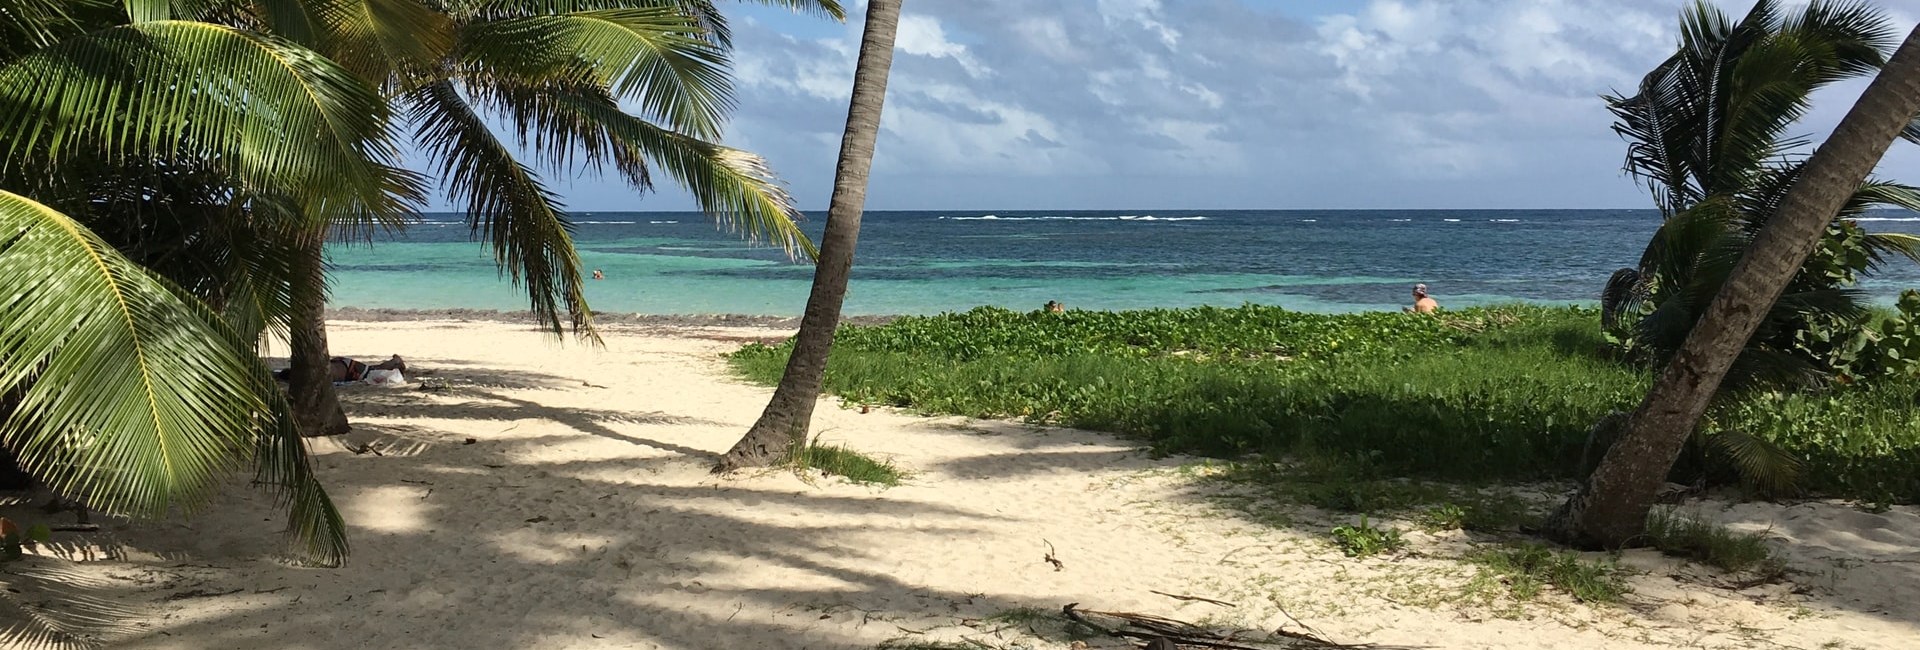 Palm trees on a wild tropical beach